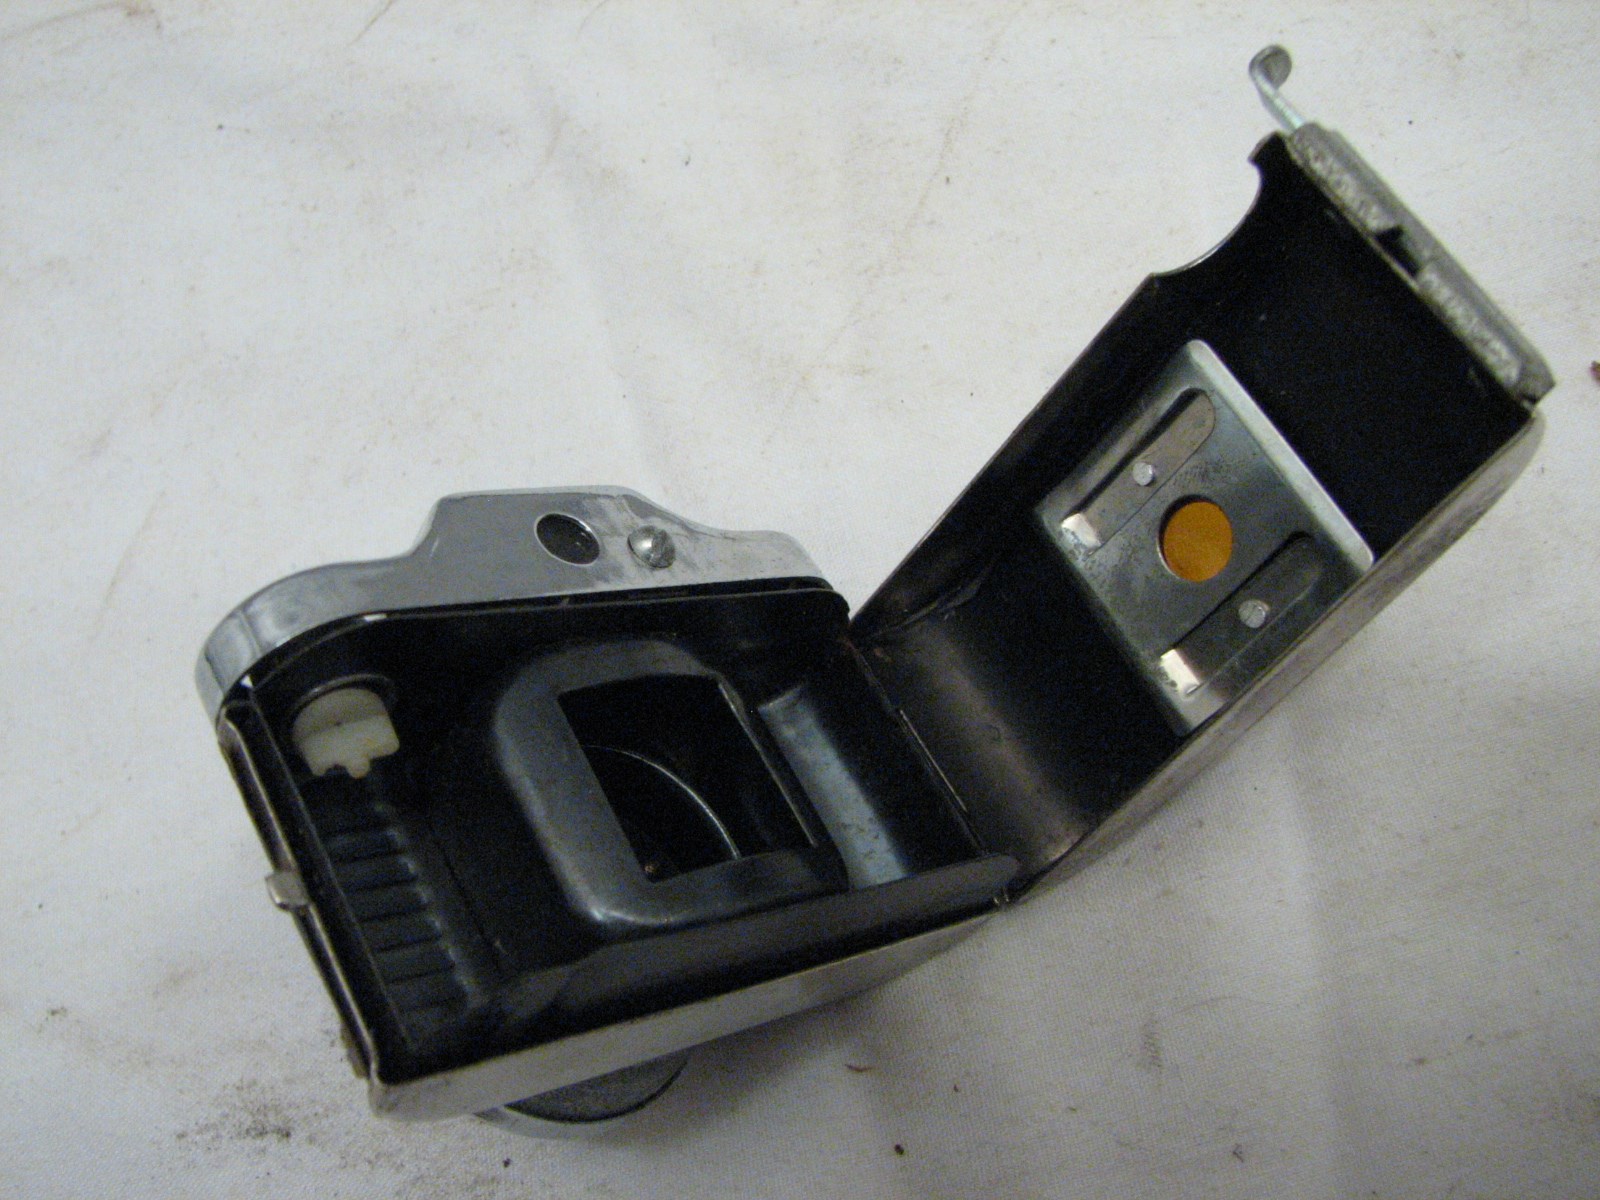 Vintage Speedex Miniature Spy Camera w/Leather Case Novelty Mini Toy | eBay